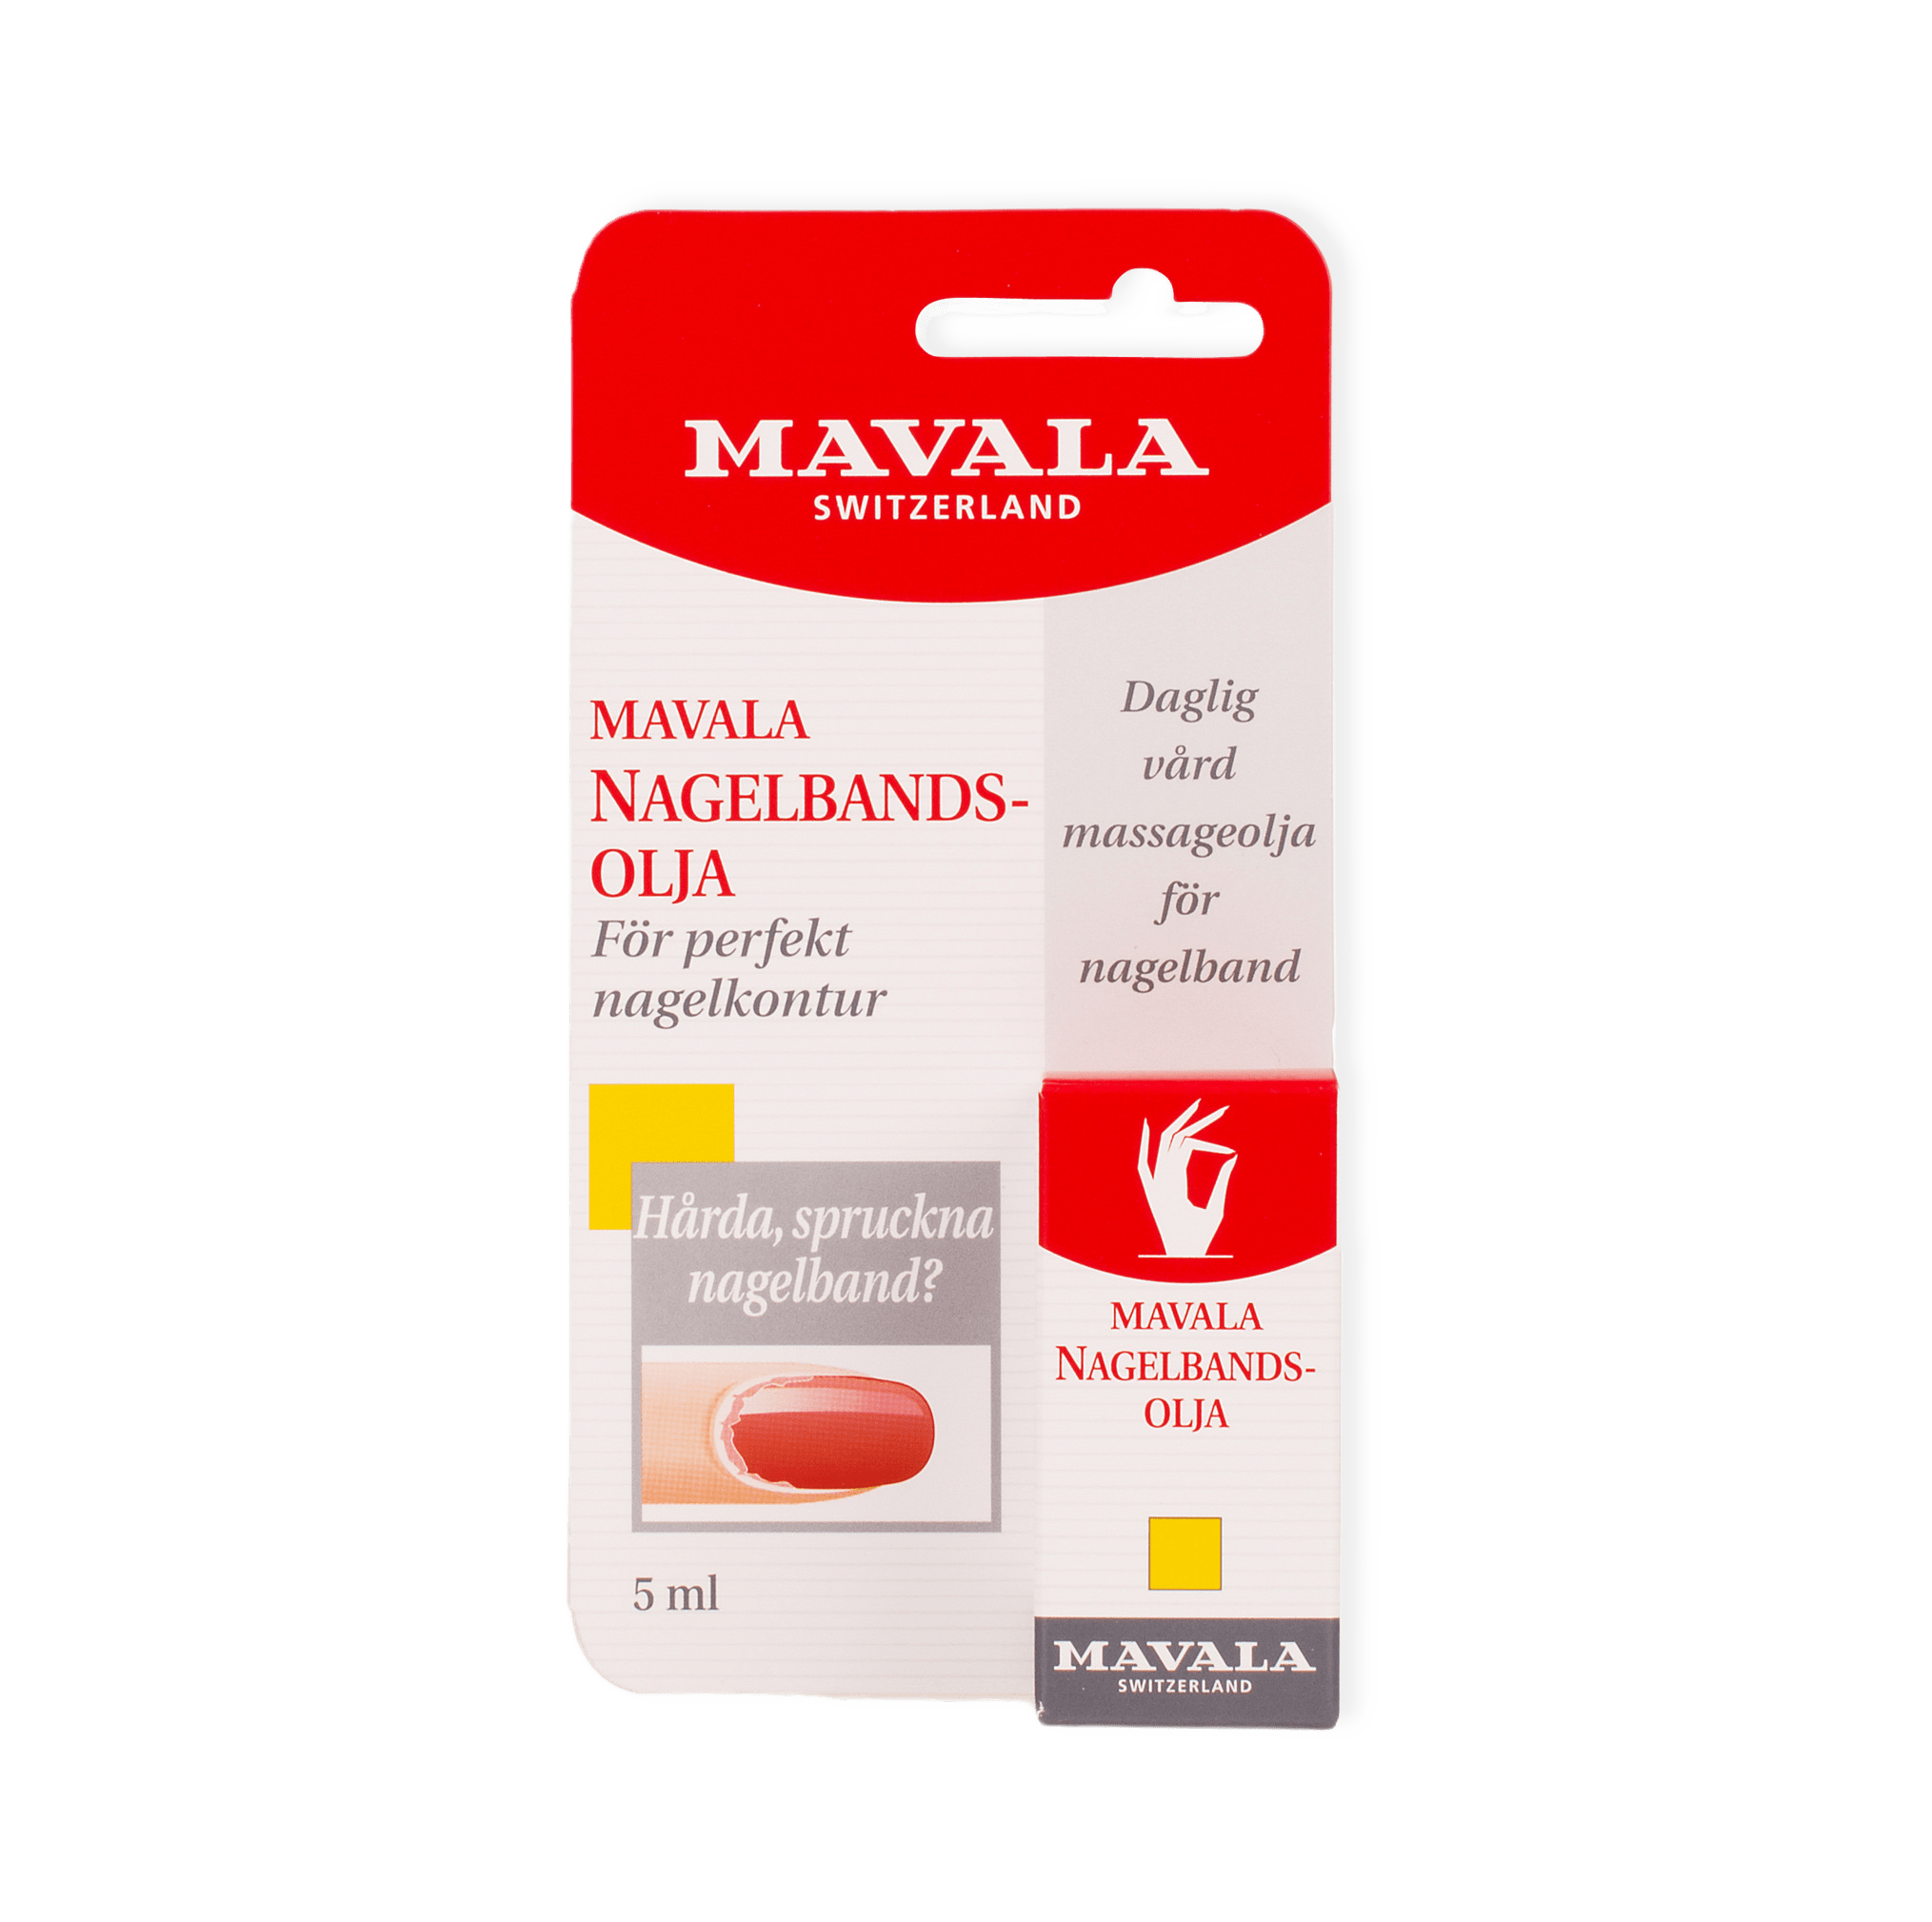 Nagelbandsolja, 5 ml från Mavala